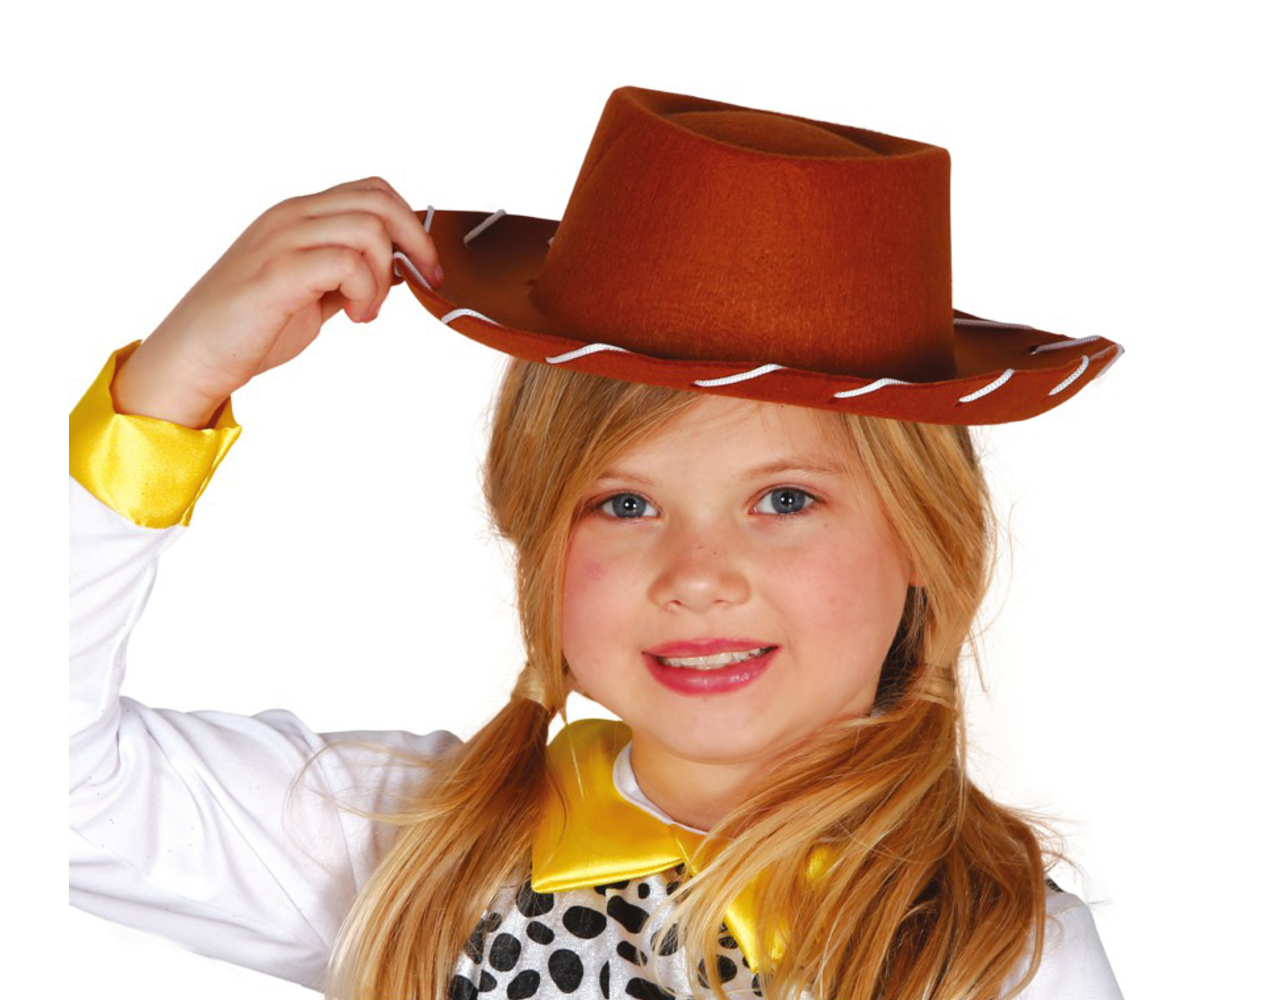 Sombrero vaquero niño marron 